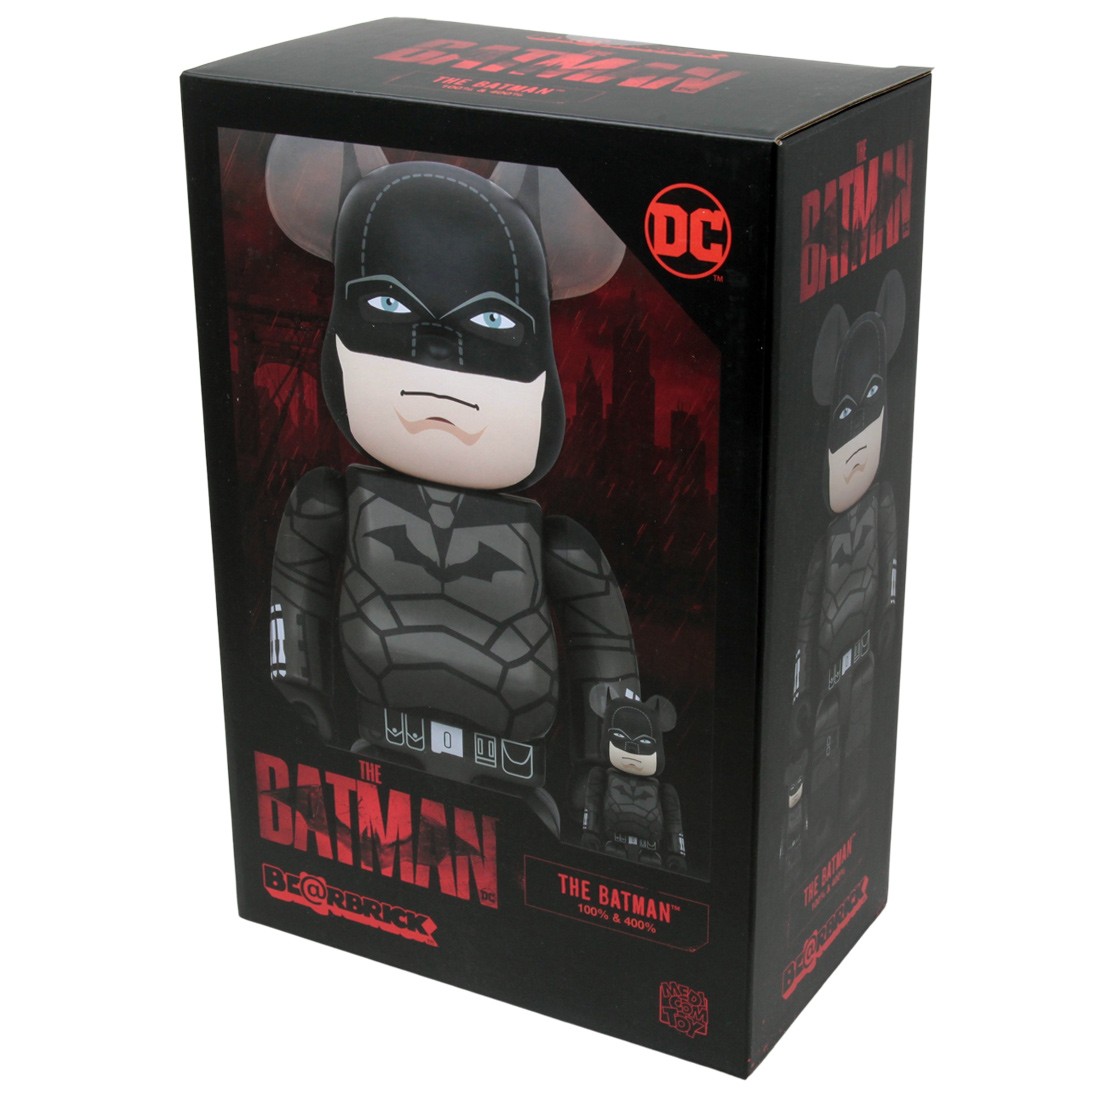 Medicom DC The Batman 100% 400% Bearbrick Figure Set (black)